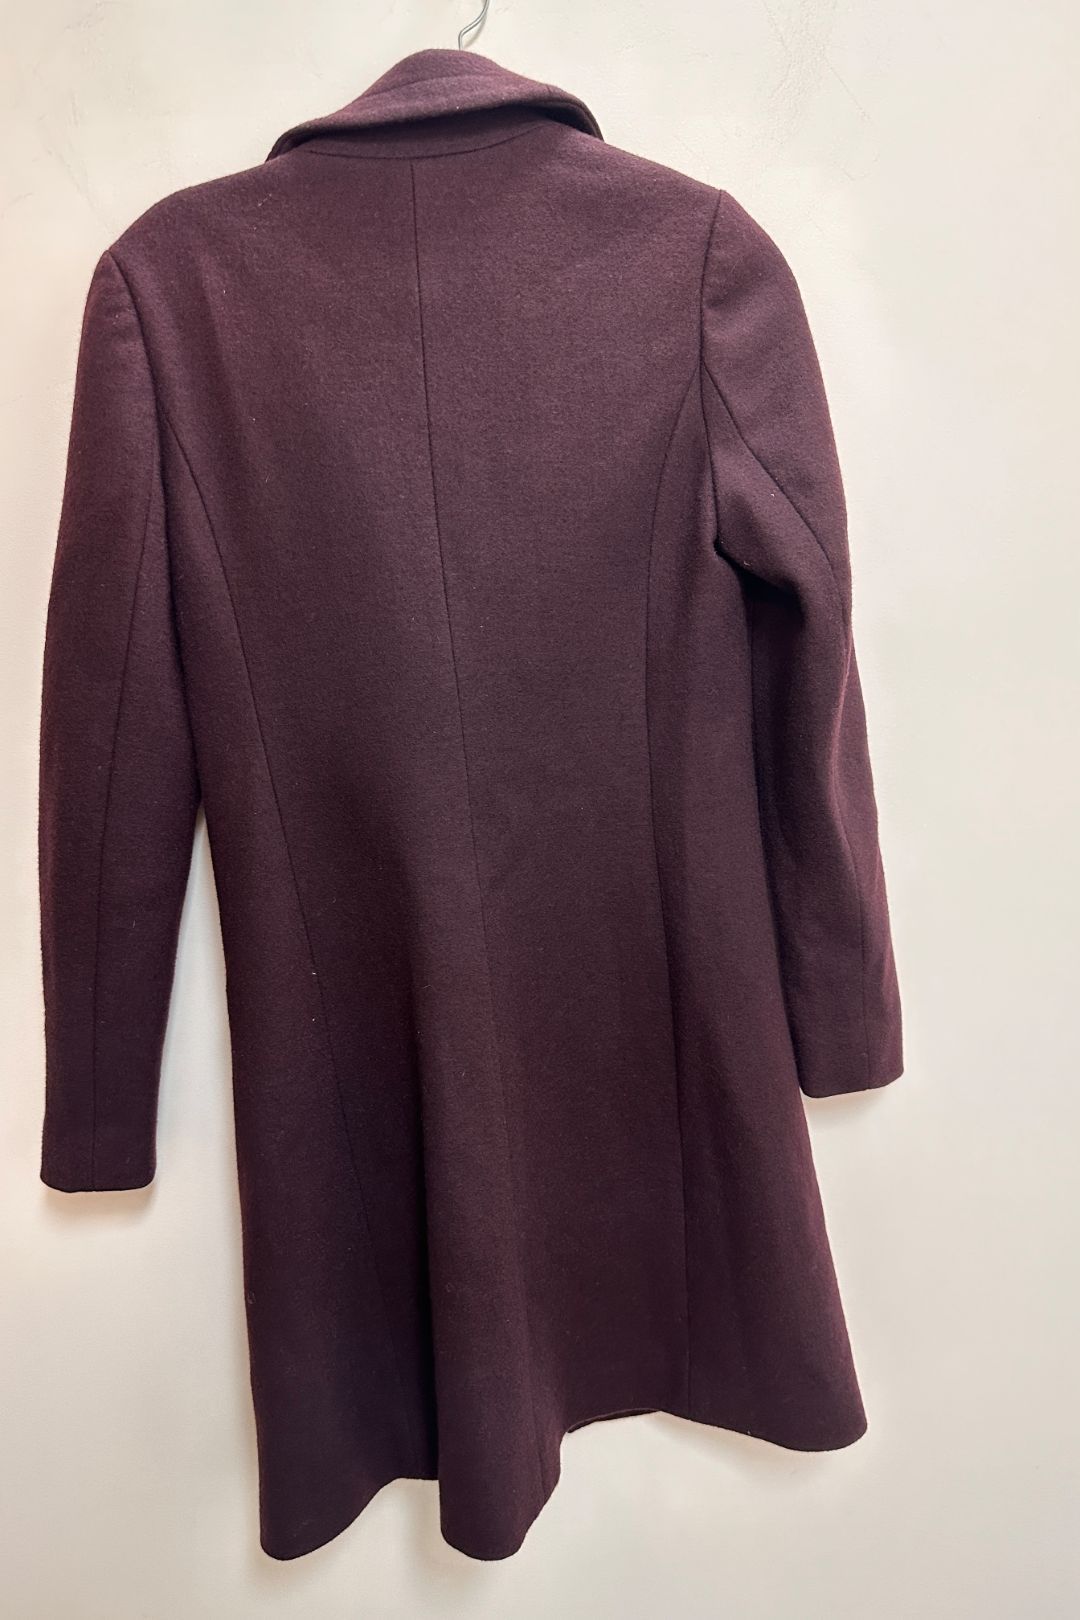 Saba Wool Blend Zip Up Coat in Burgundy